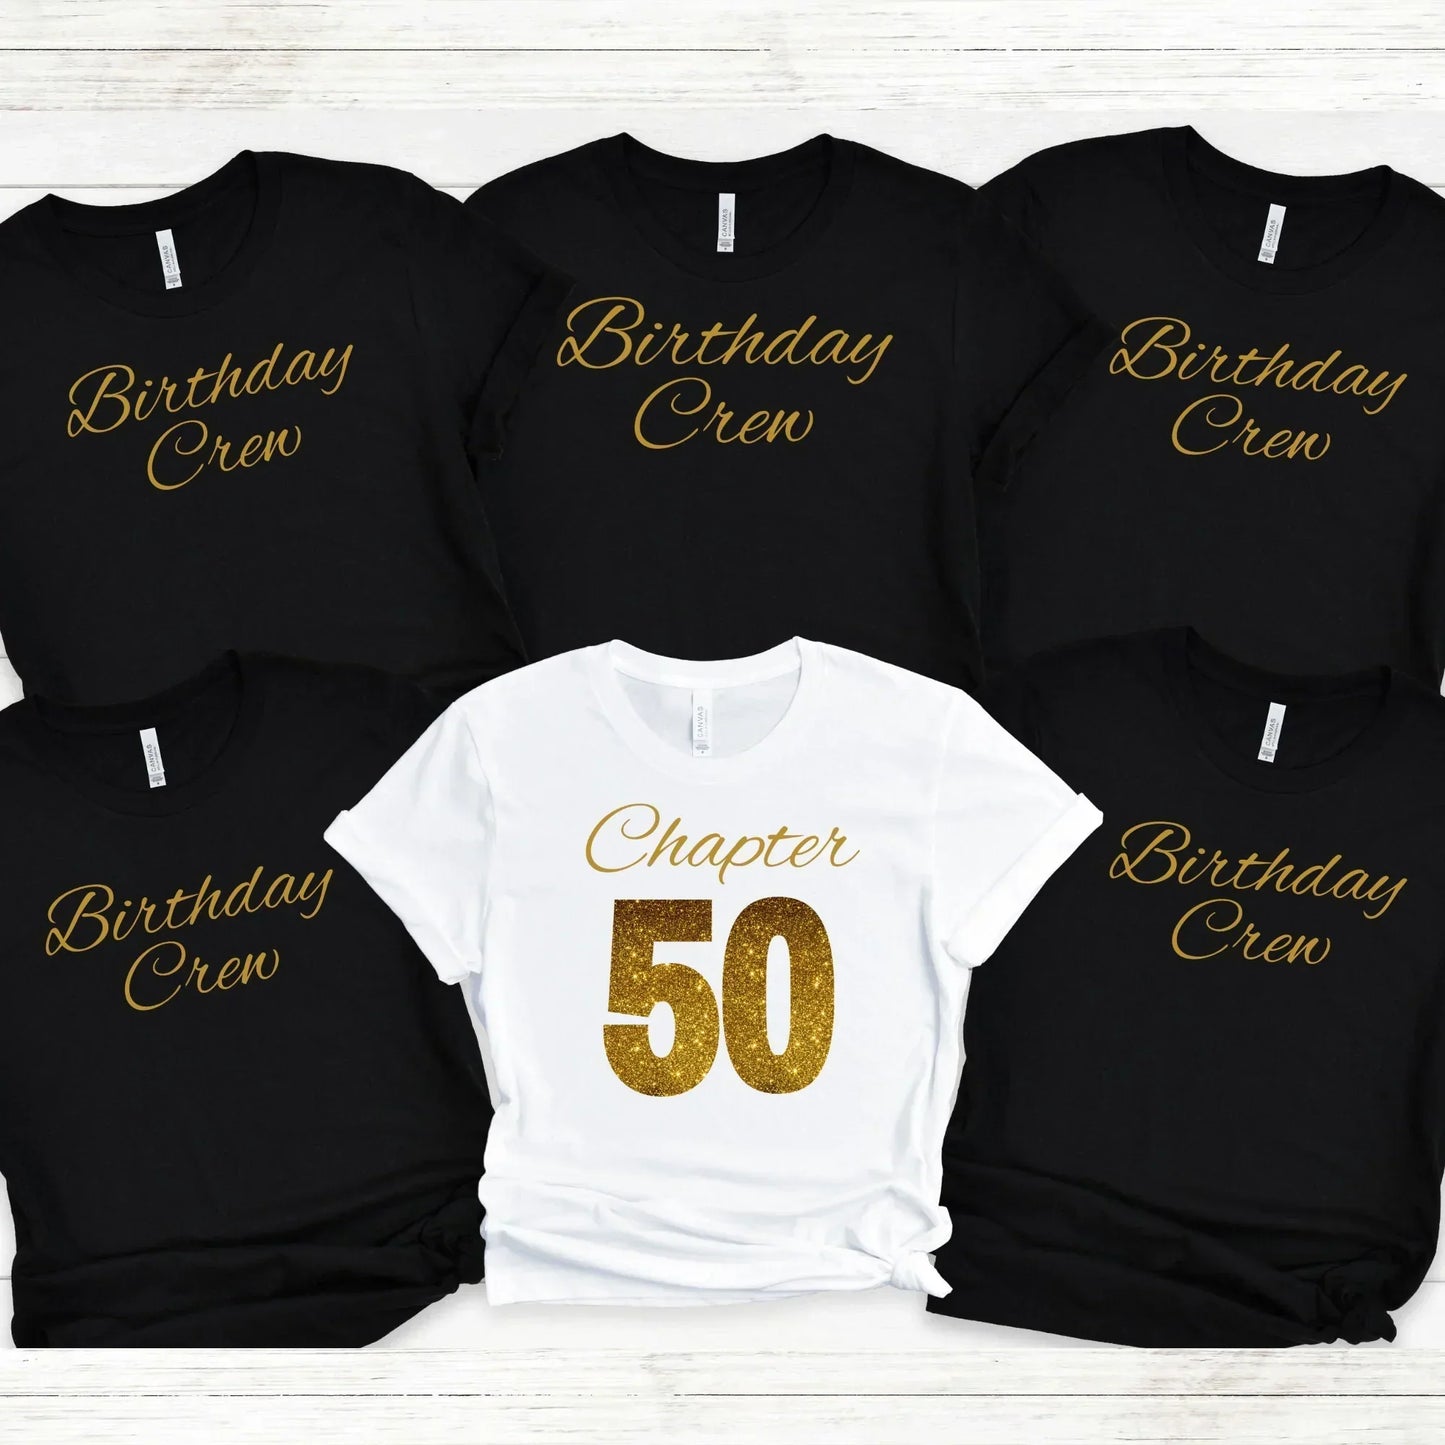 50th Birthday Shirt - Celebrate Your Milestone in Style! HMDesignStudioUS